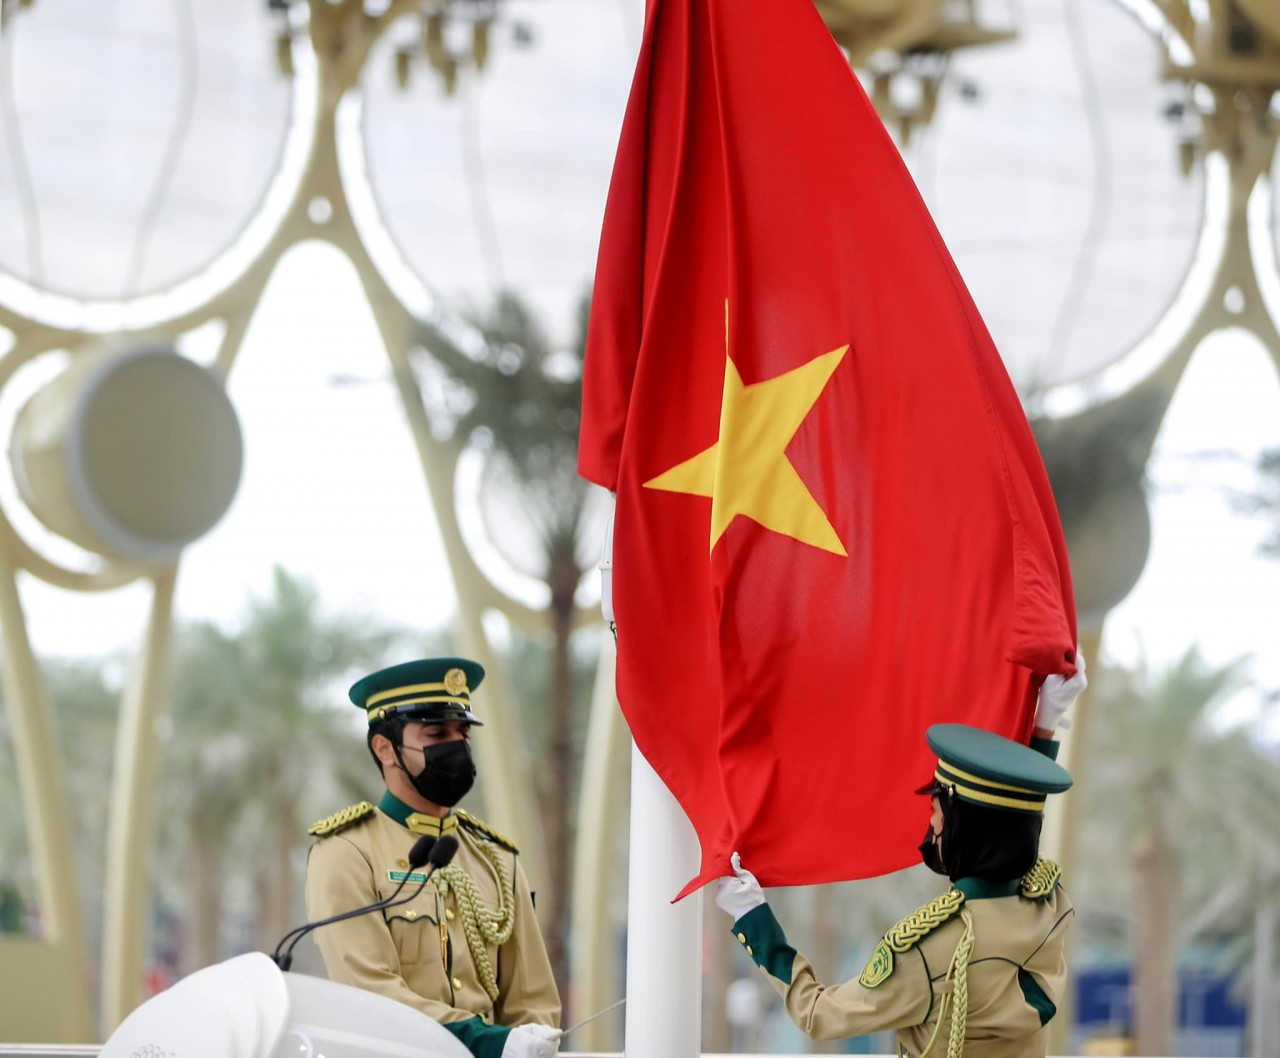 [Photos] Vietnam National Day held at World Expo 2020 Dubai